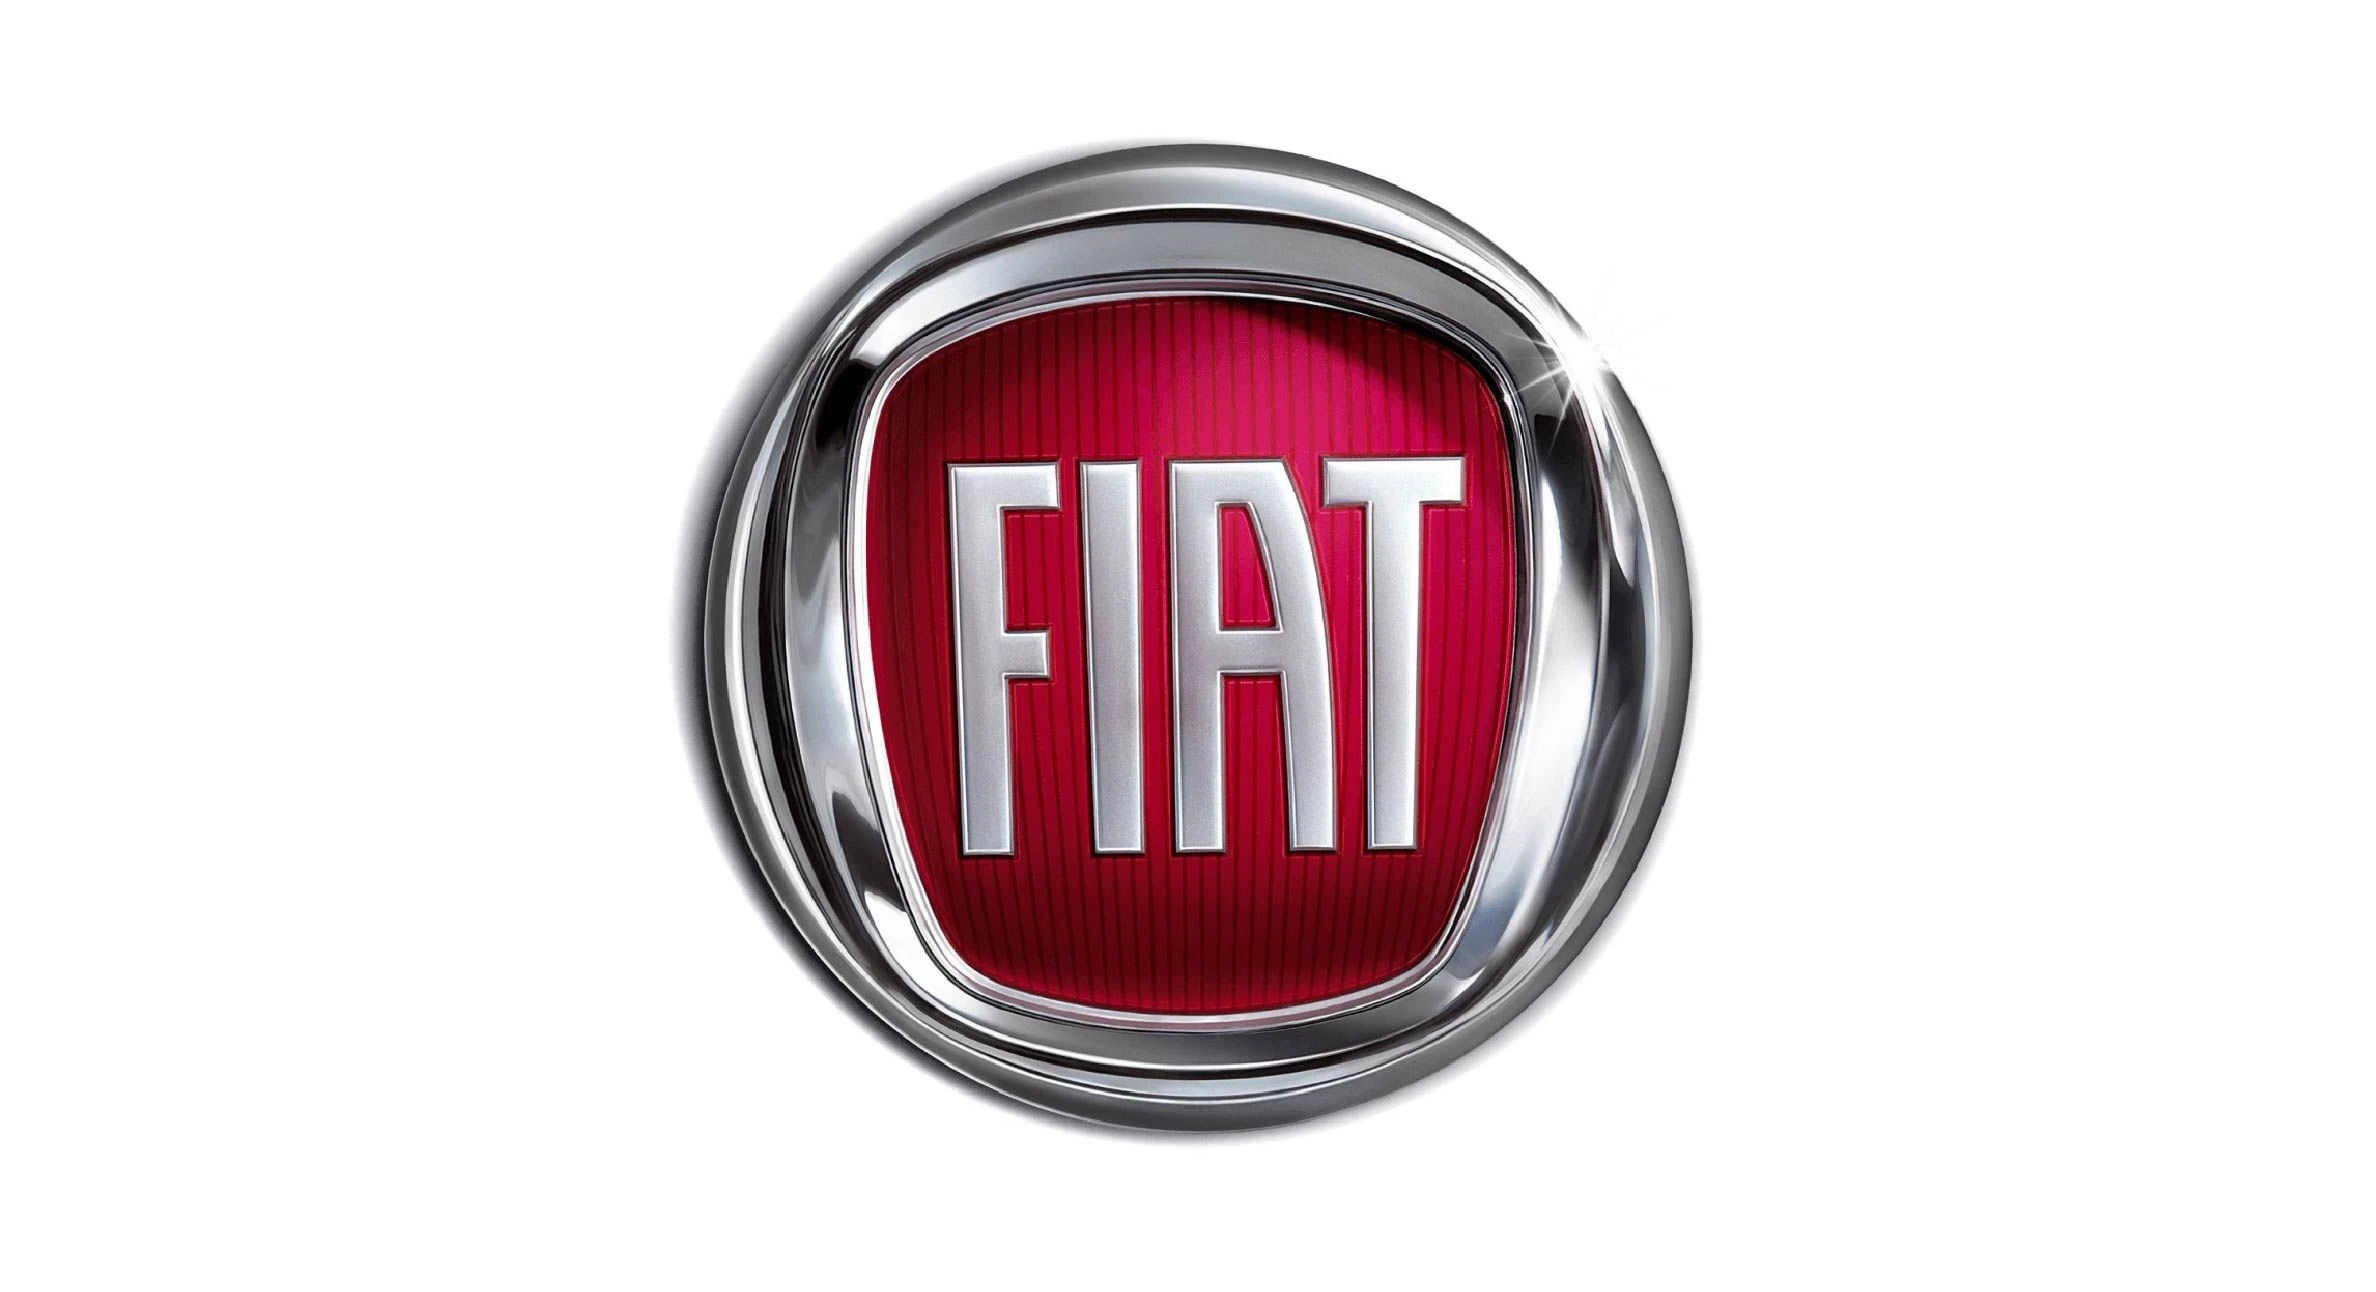 Fiat car brand logo